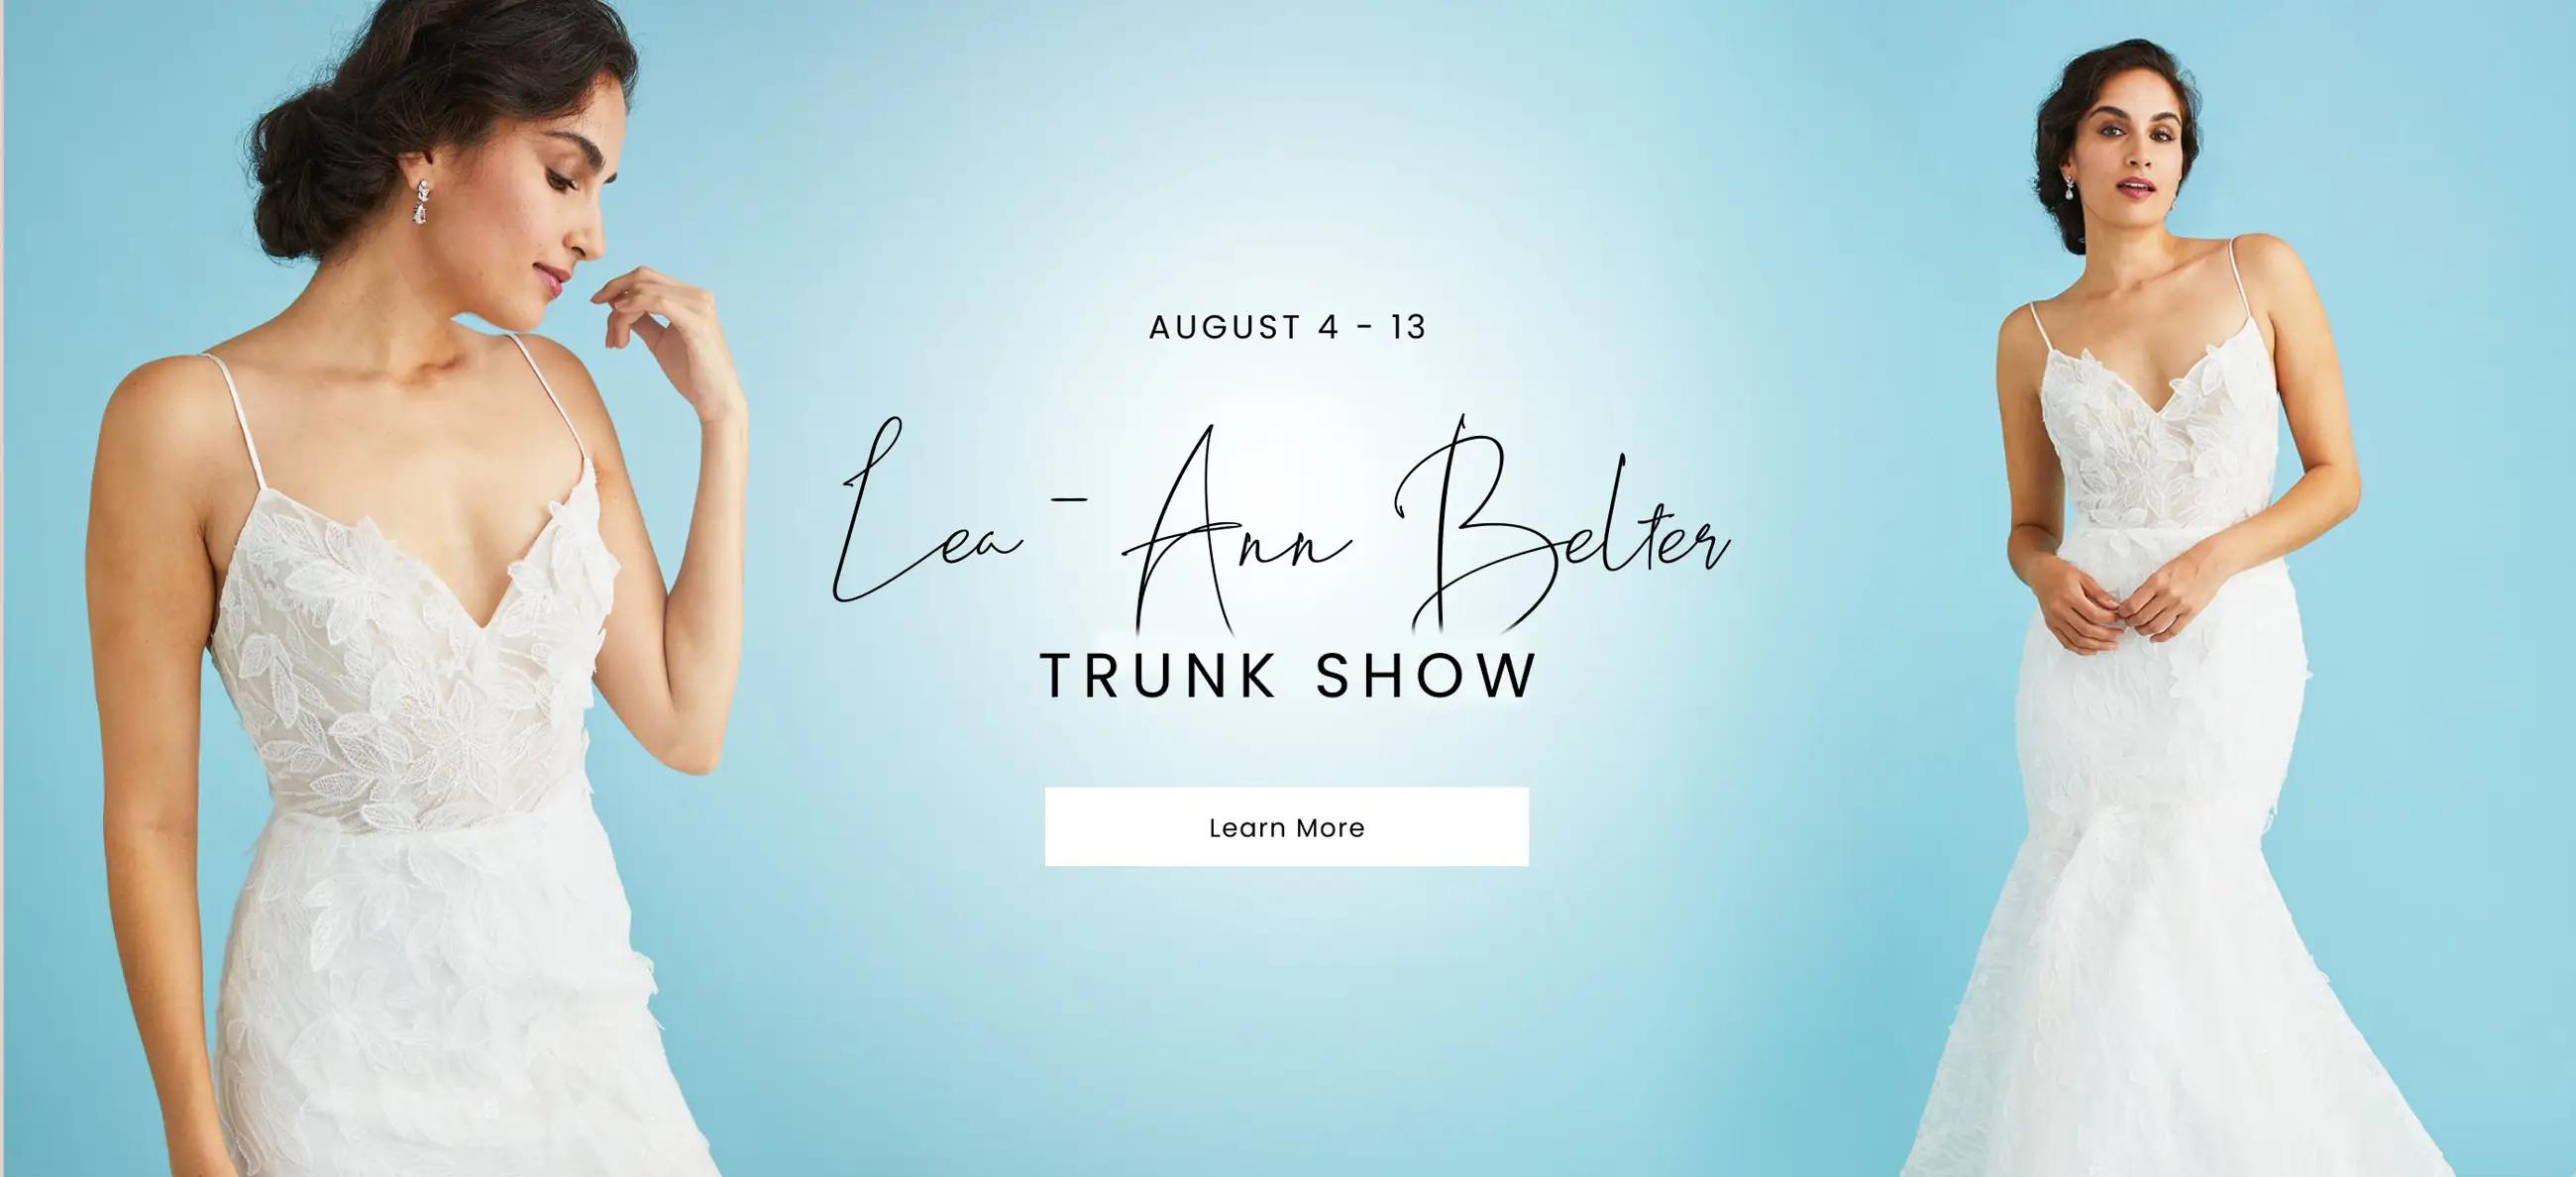 "Lea-Ann Belter Trunk Show" banner for desktop